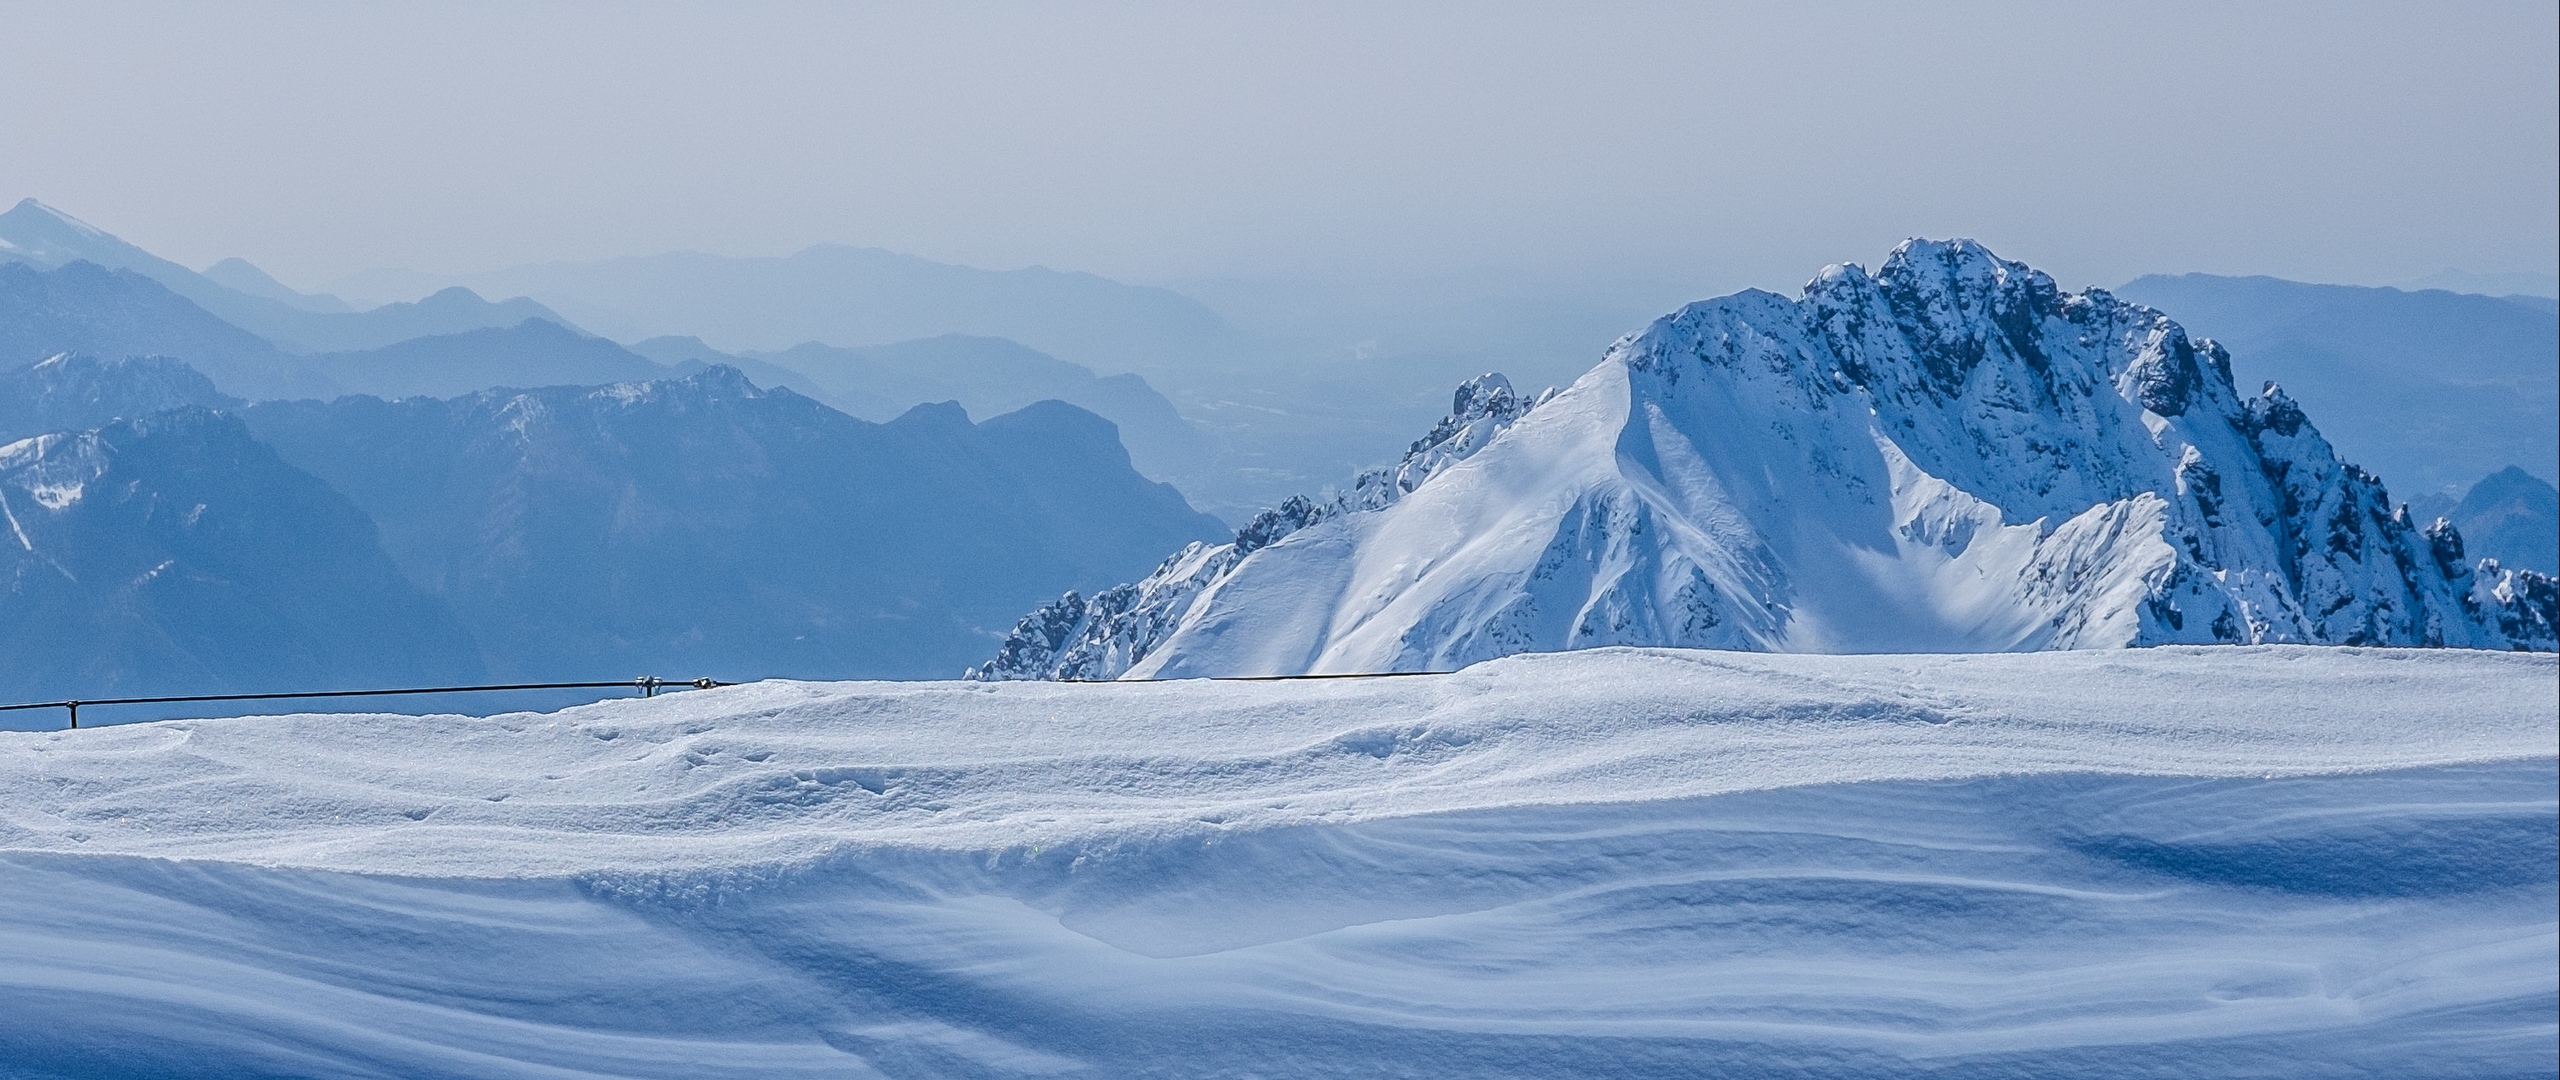 Download wallpaper 2560x1080 mountains, winter, snow, top